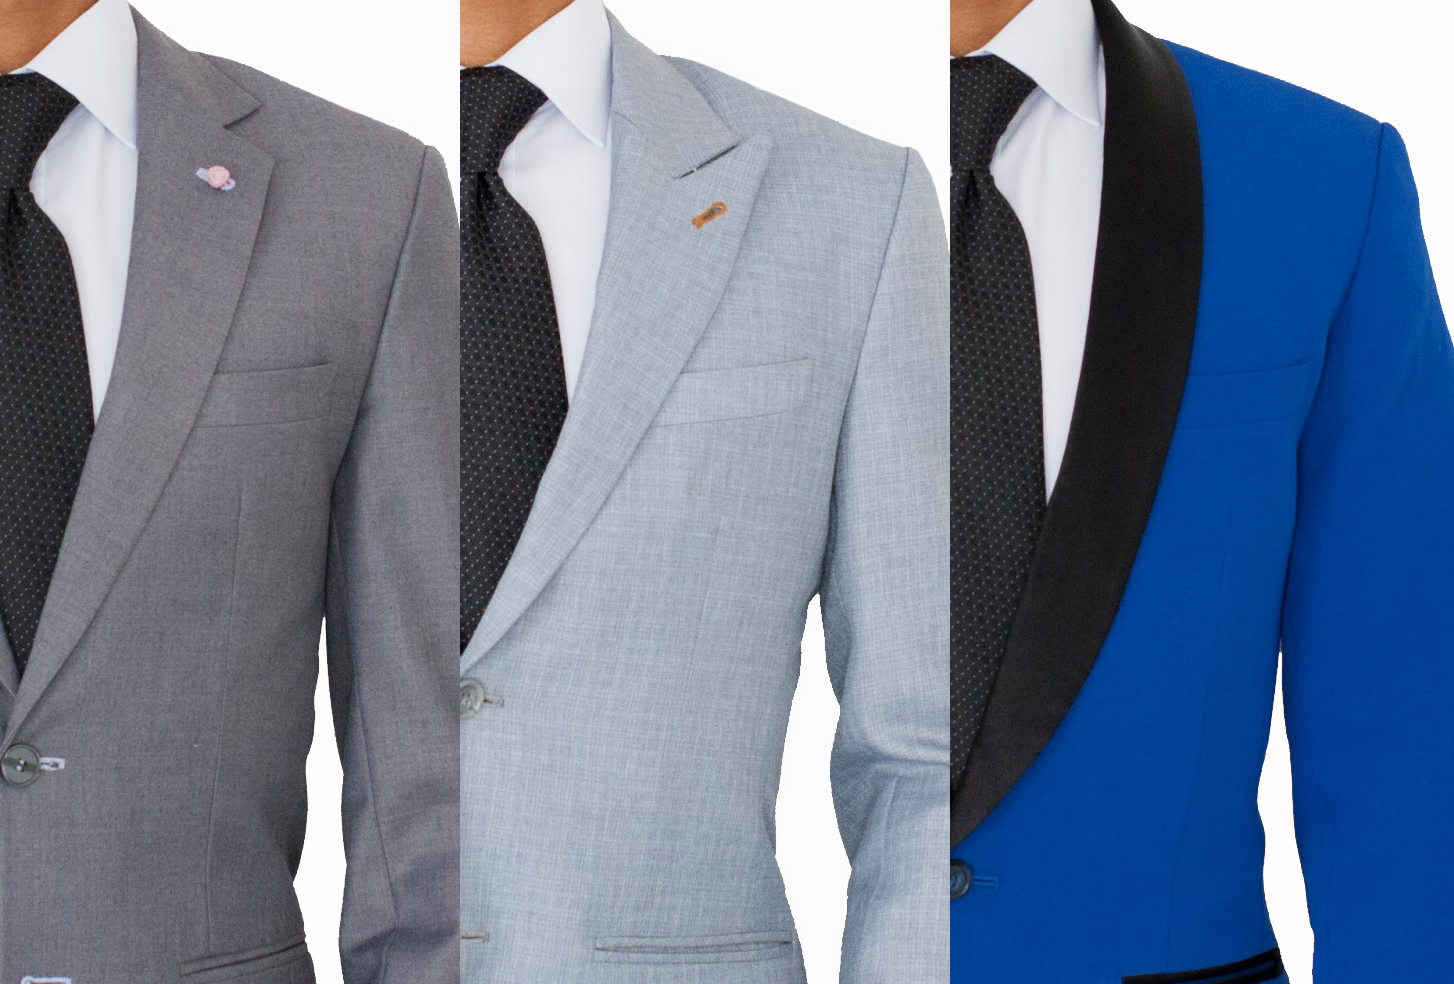 Notch vs. peak vs. shawl suit lapel